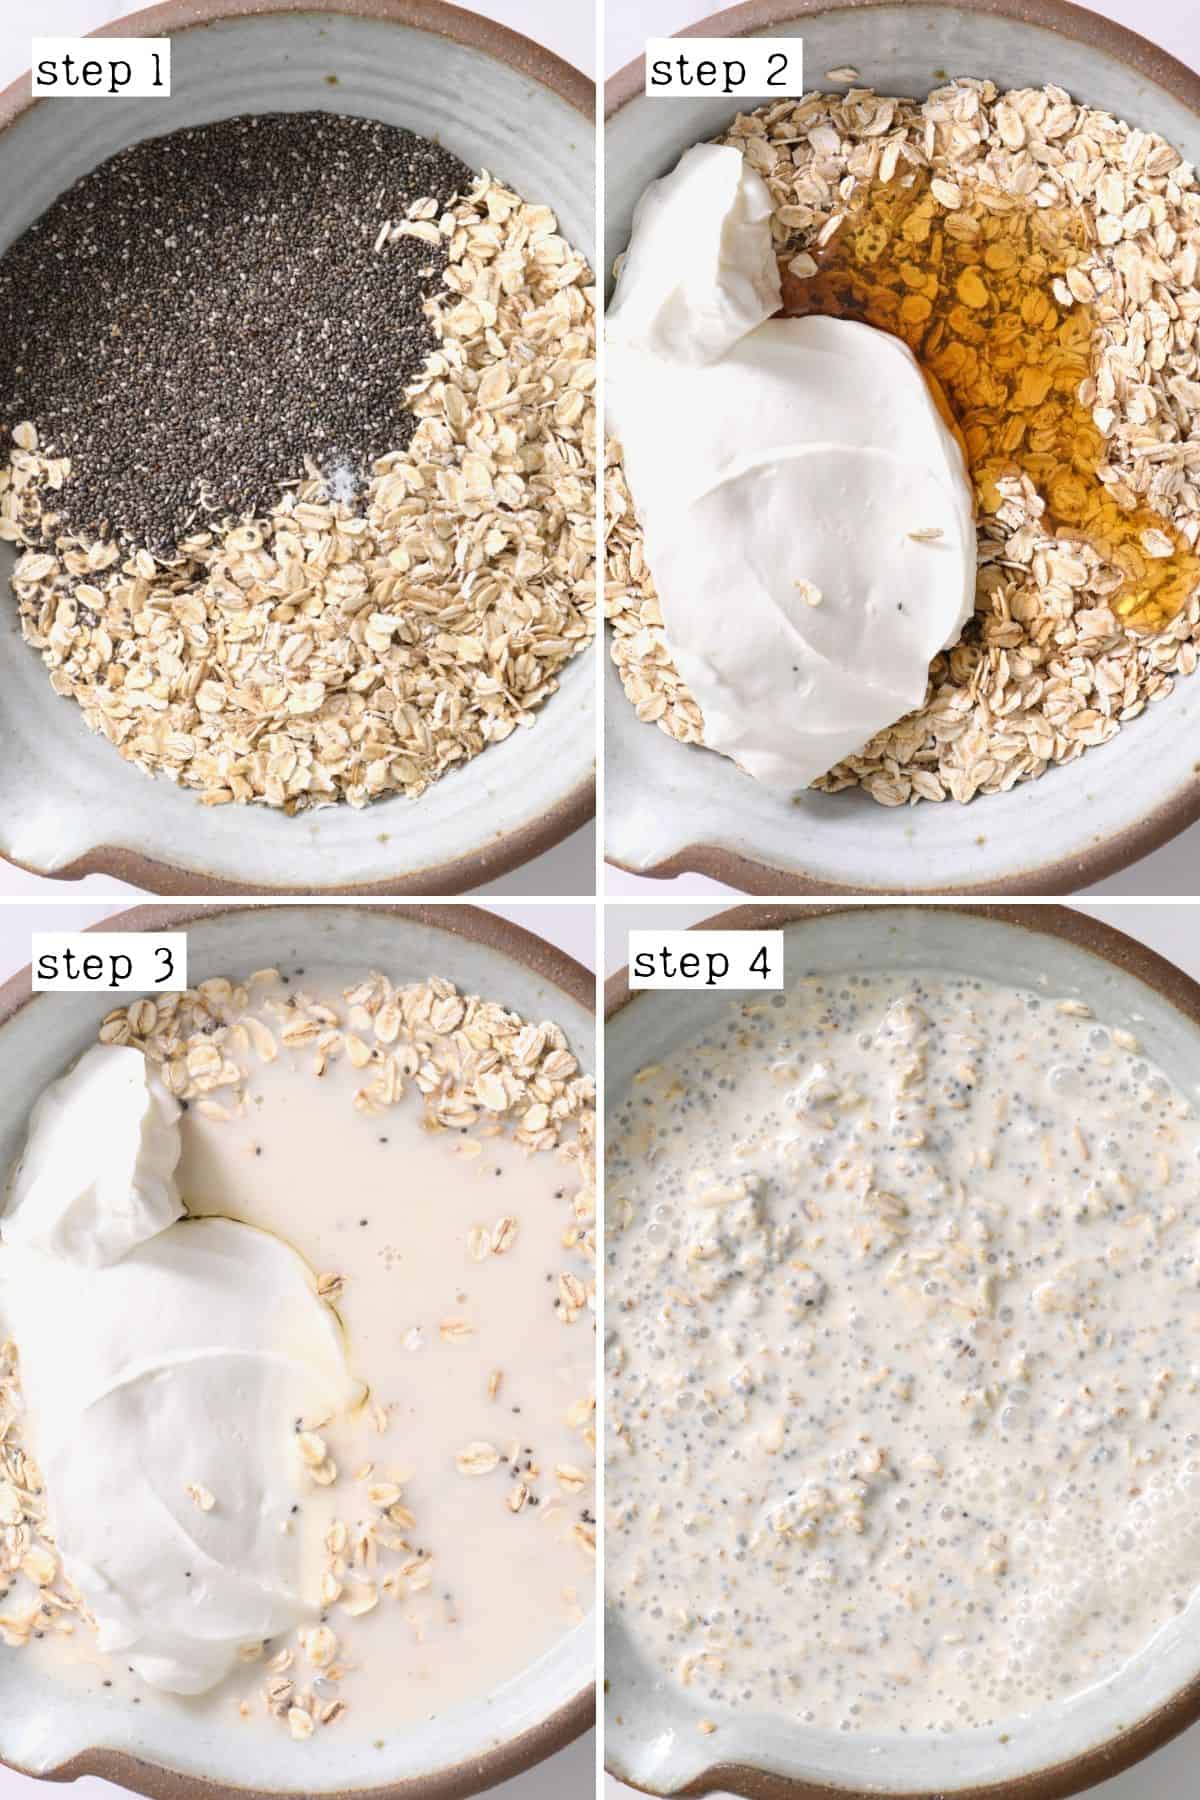 Steps for making overnight oats